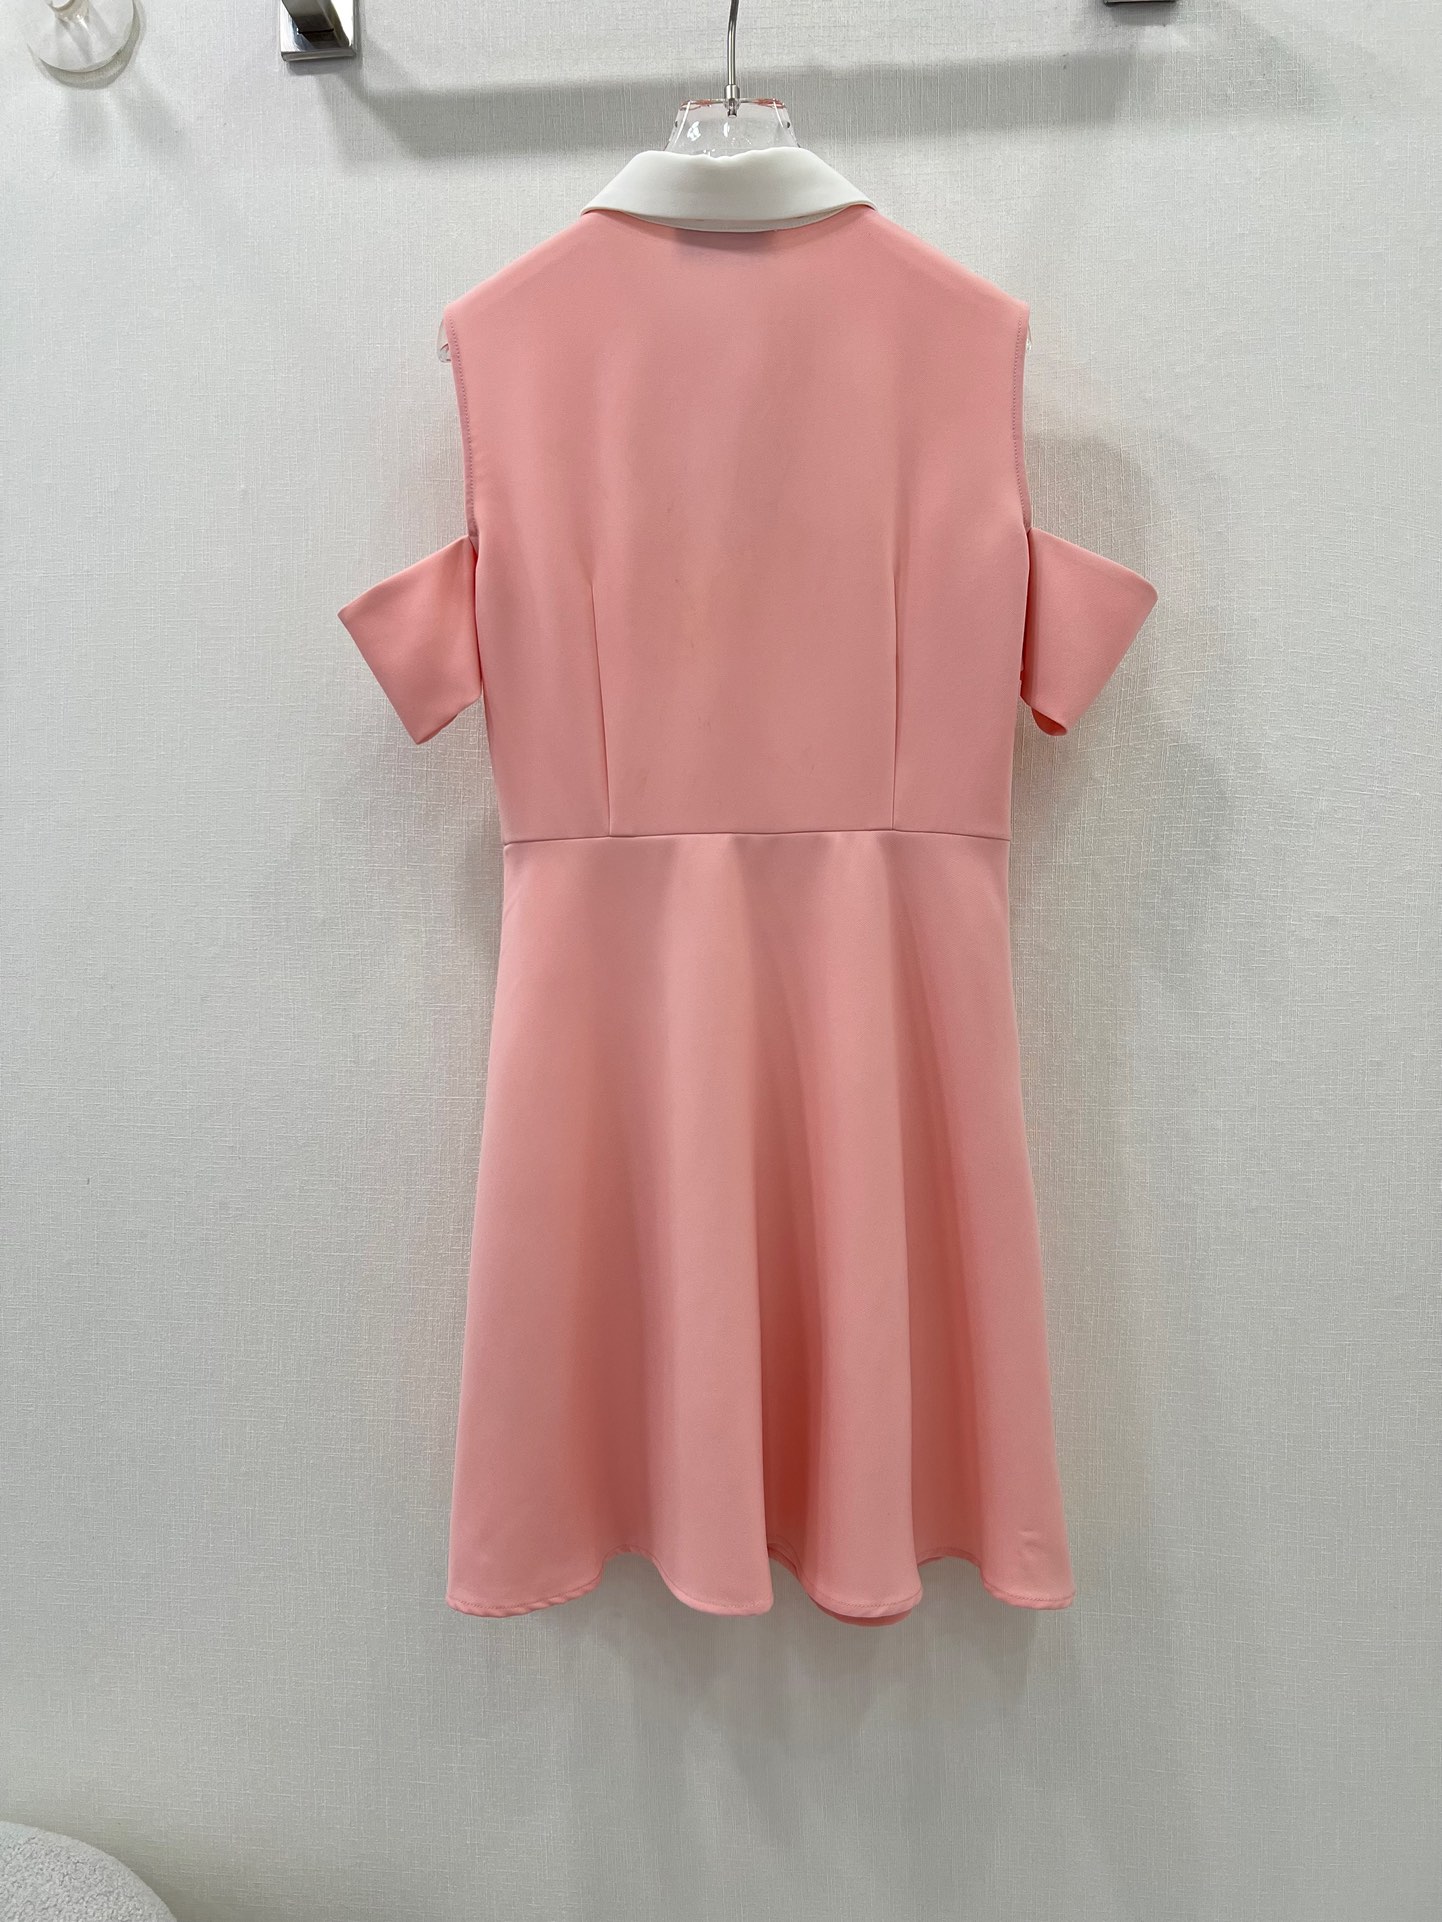 fendi キッズ ワンピーススーパーコピー 魅力的なスタイル スカート セクシー 優雅 高級品 ピンク_8